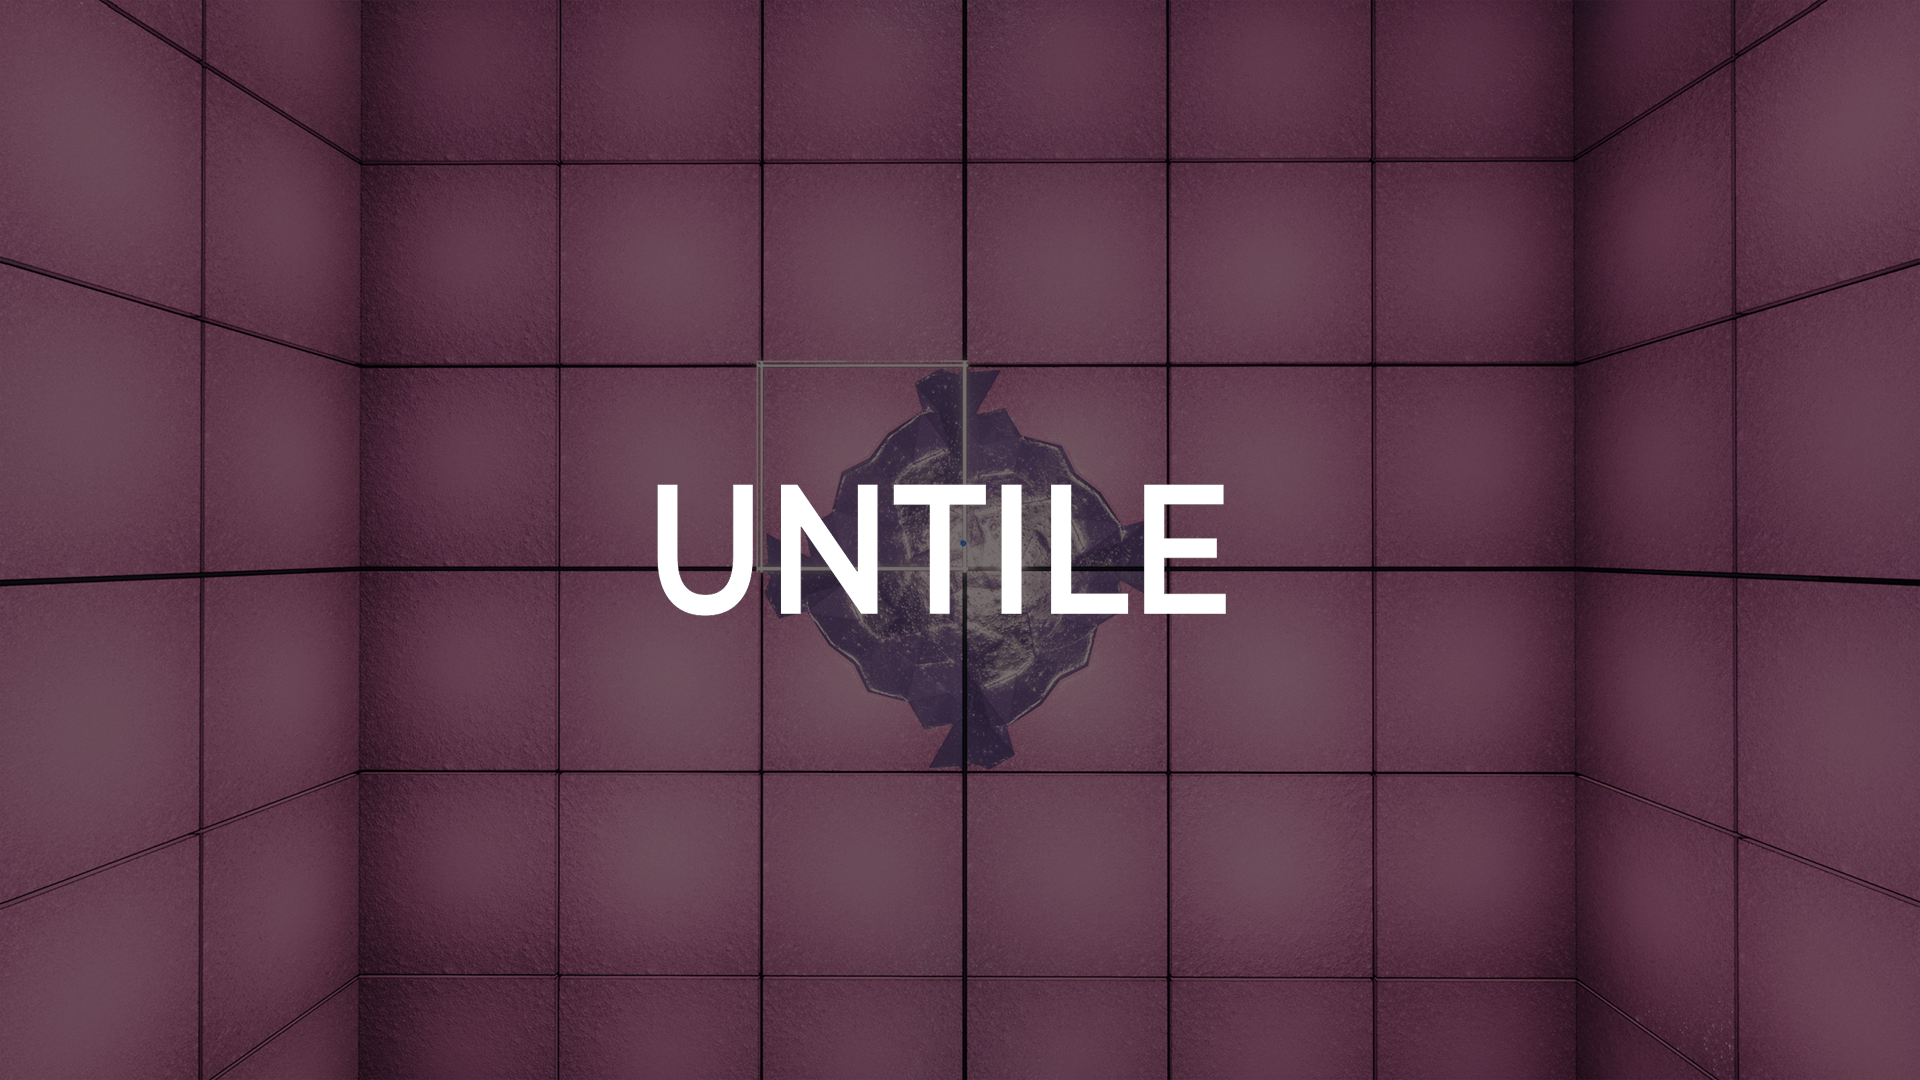 Untile